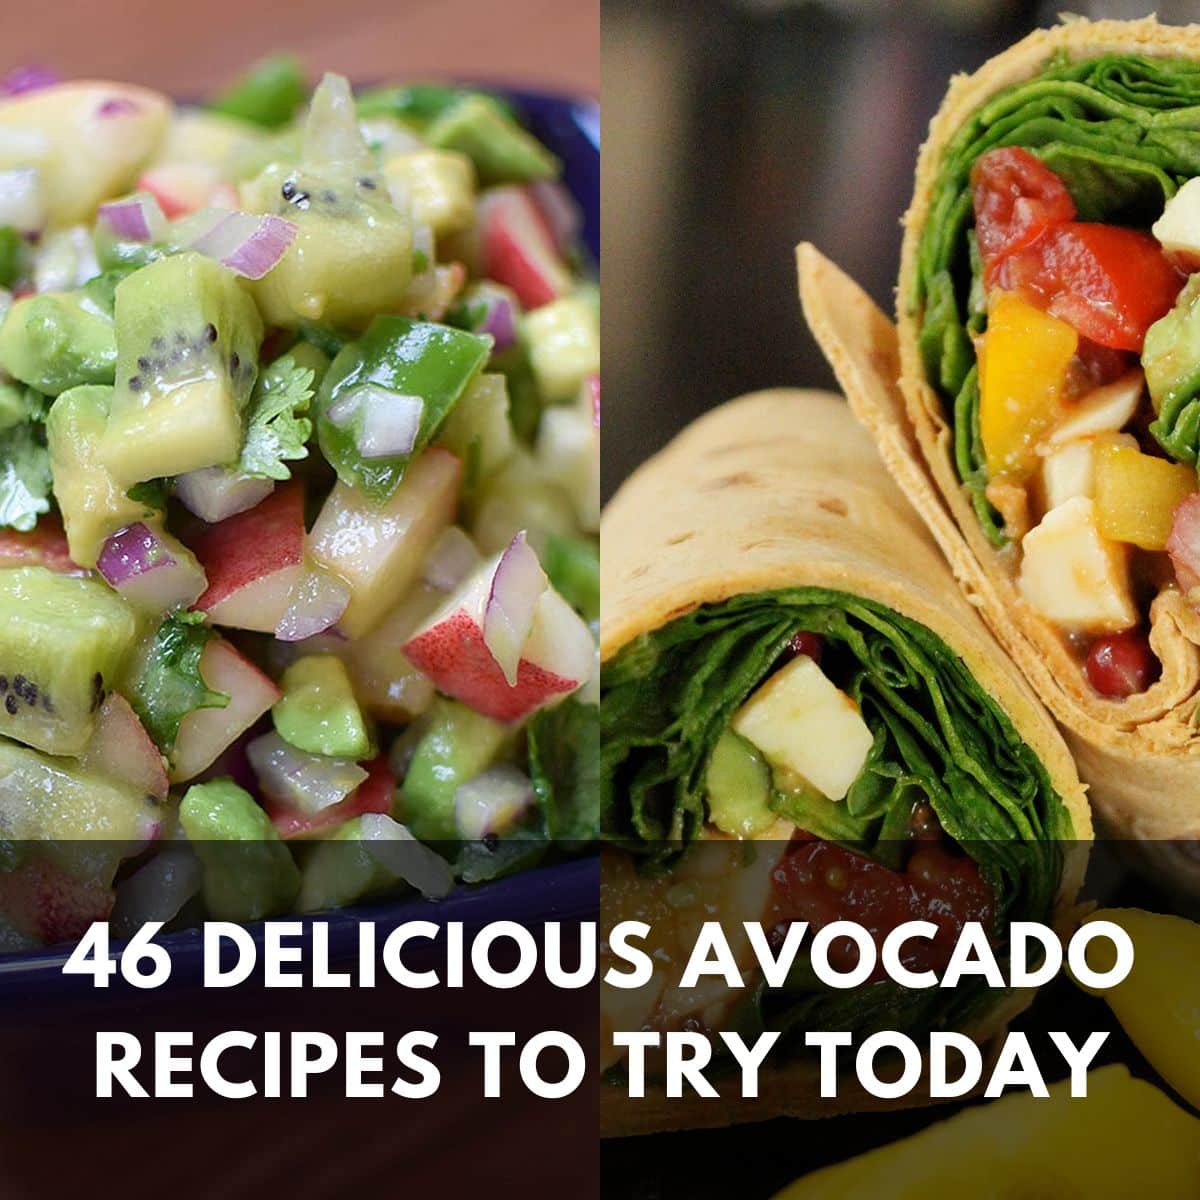 46 delicious avocado recipes to try today main